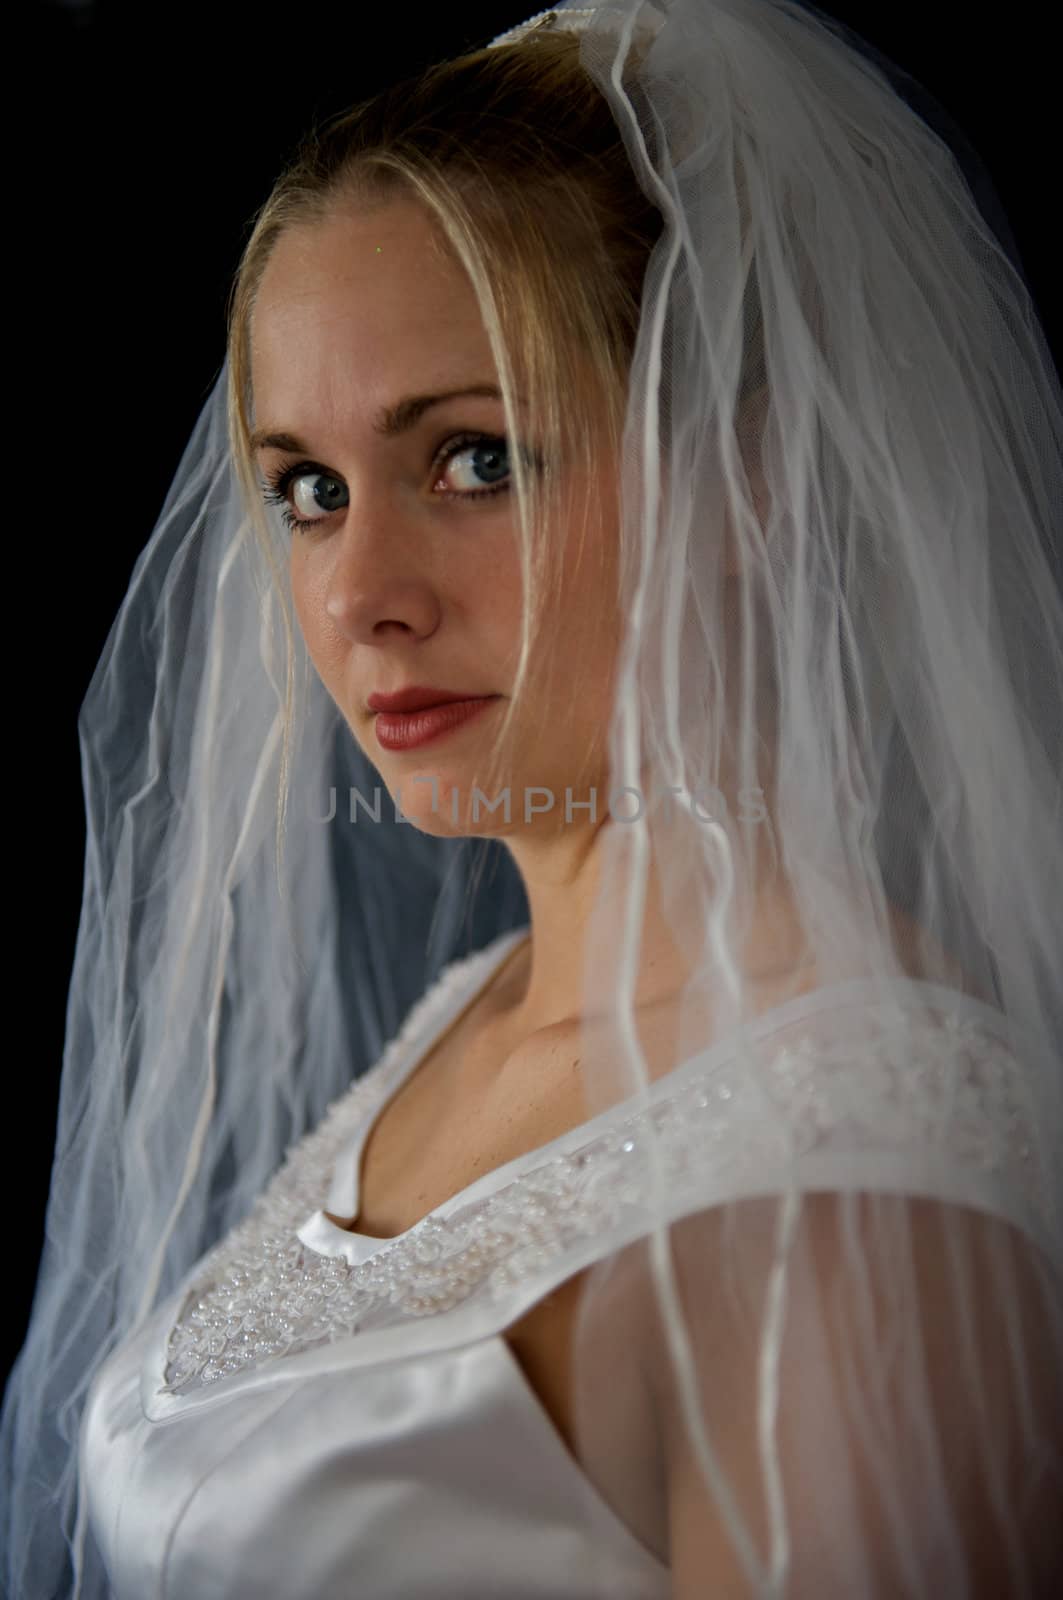 Beautiful blonde bride in extravagant veil and wedding dress on black background.